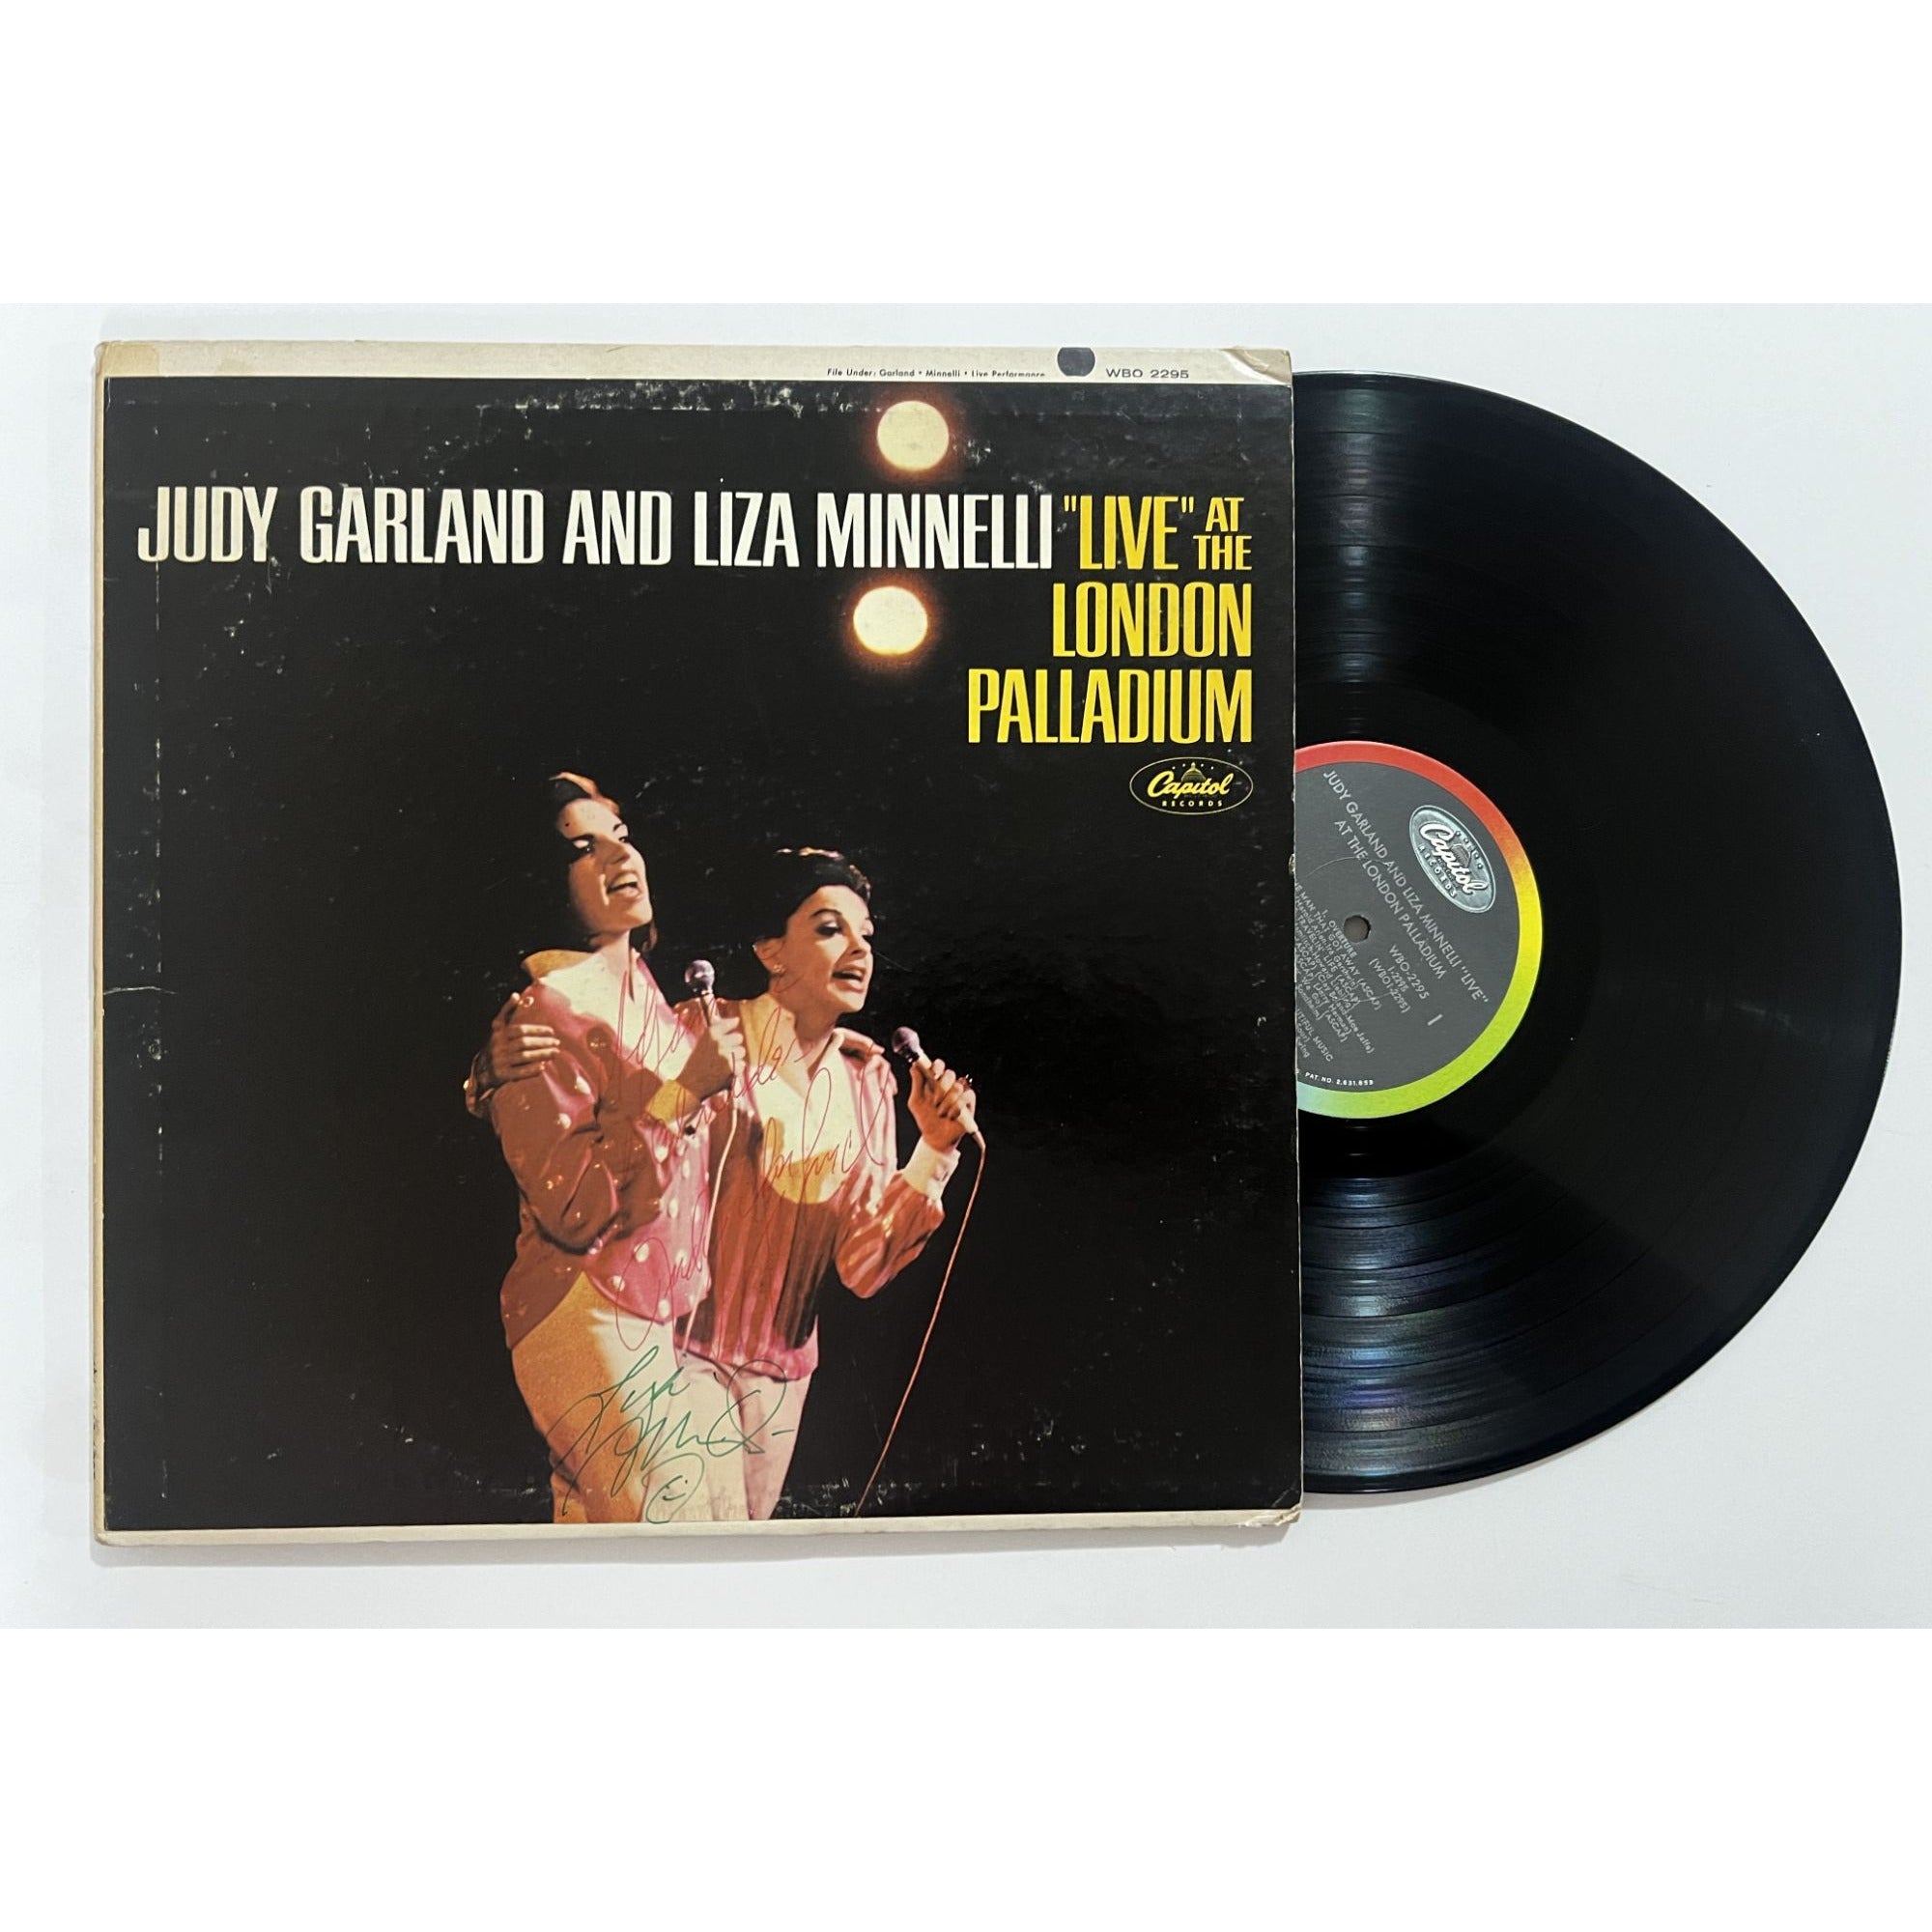 Judy Garland and Liza Minnelli live at the London Palladium original LP signed